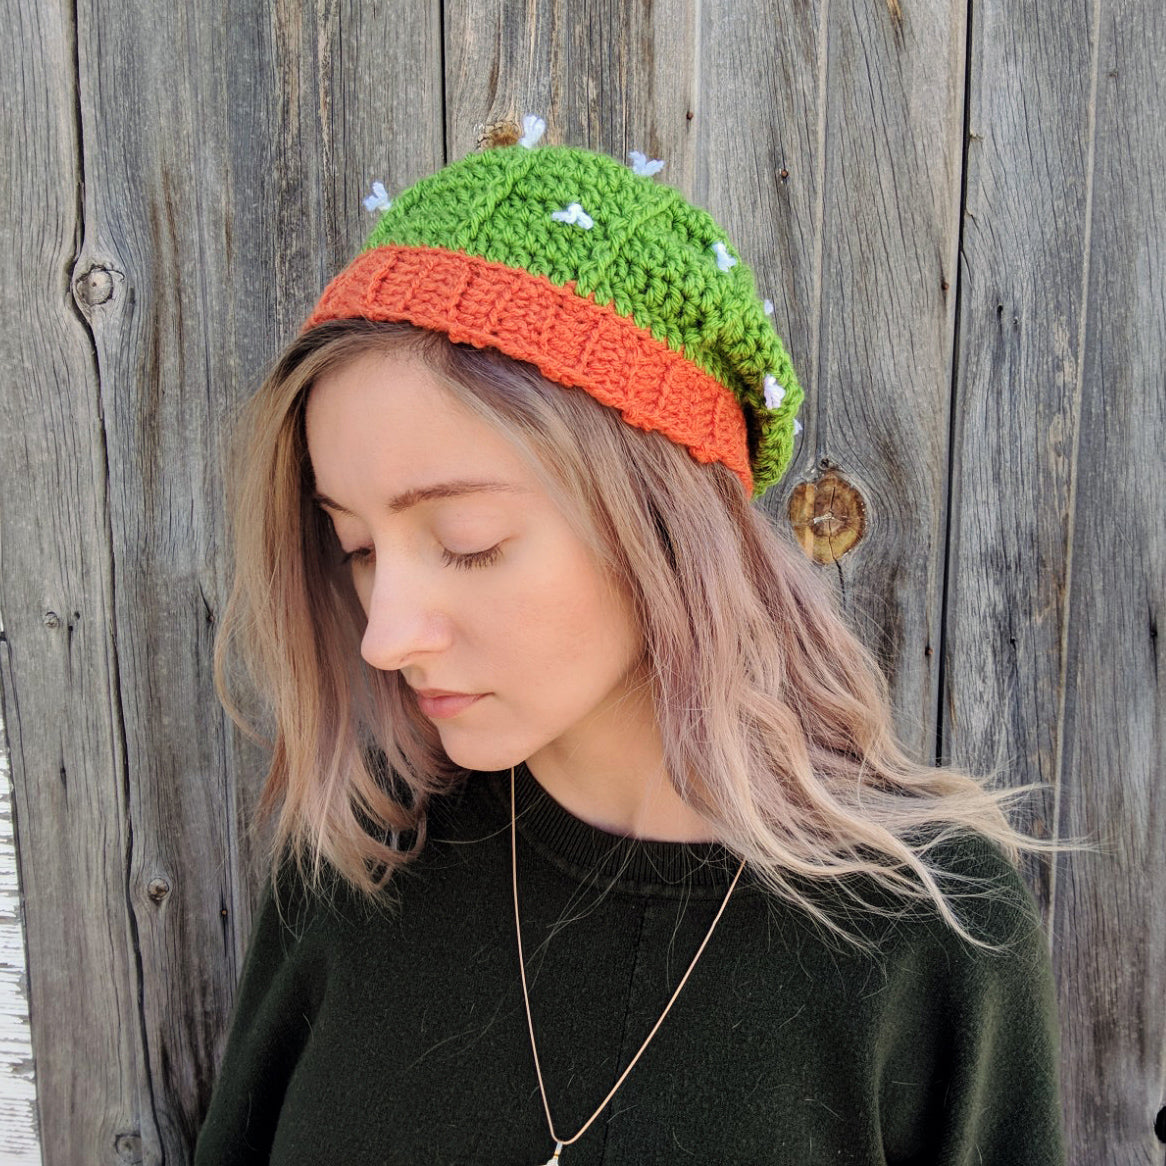 Crochet Pattern: Cactus Hat